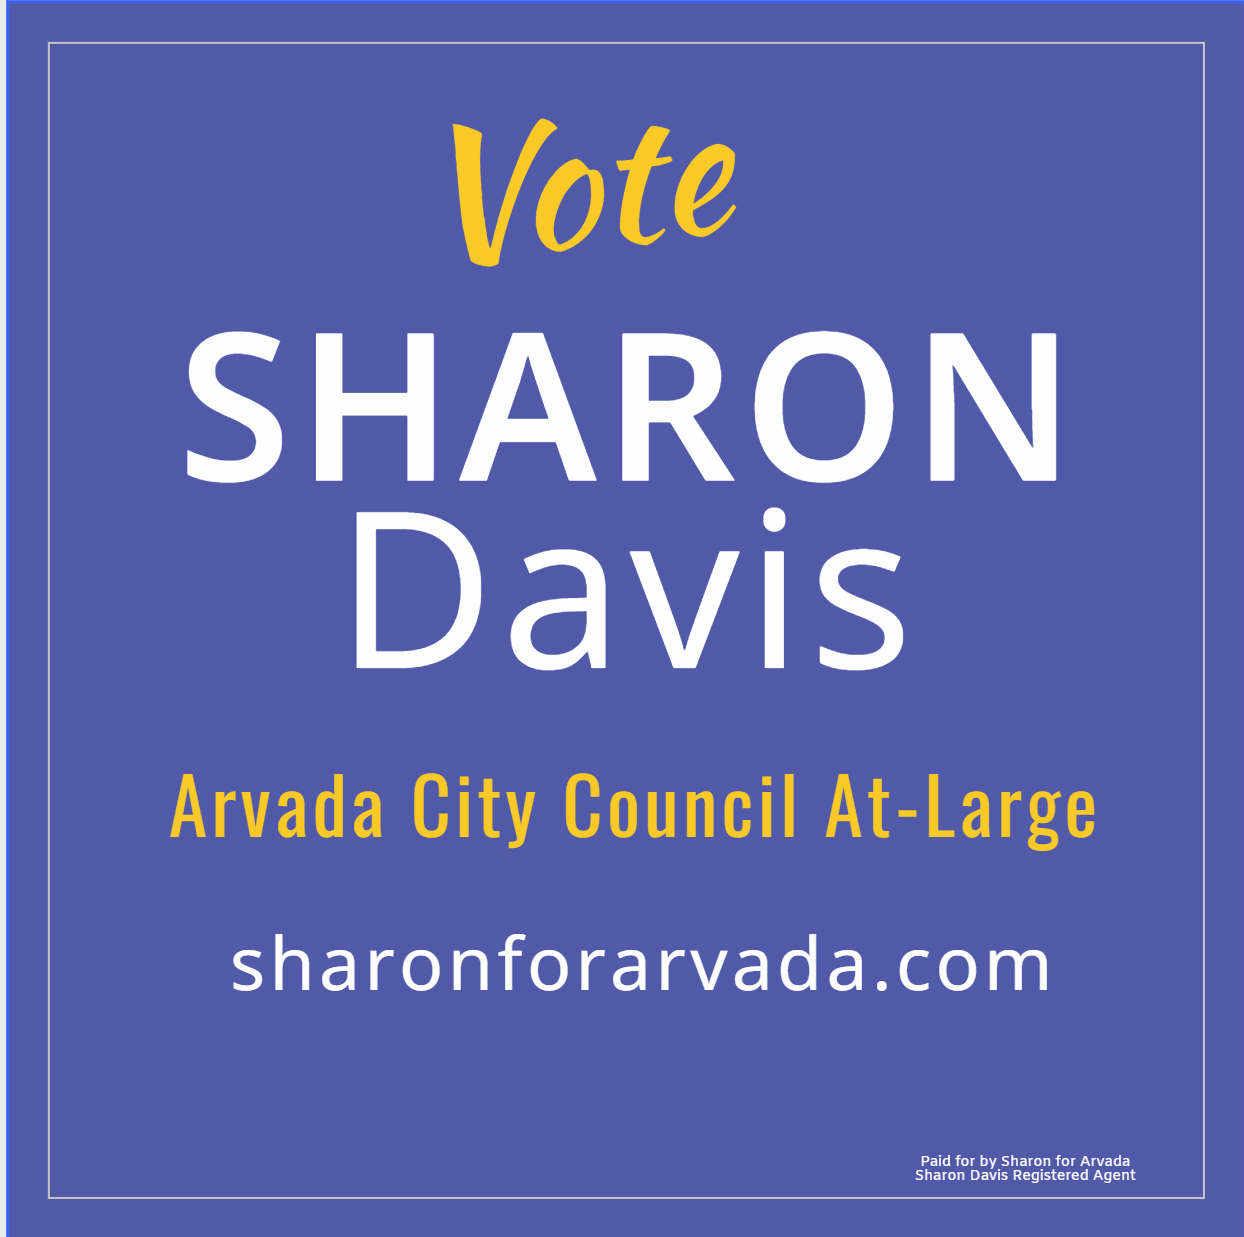 Sharon For Arvada logo